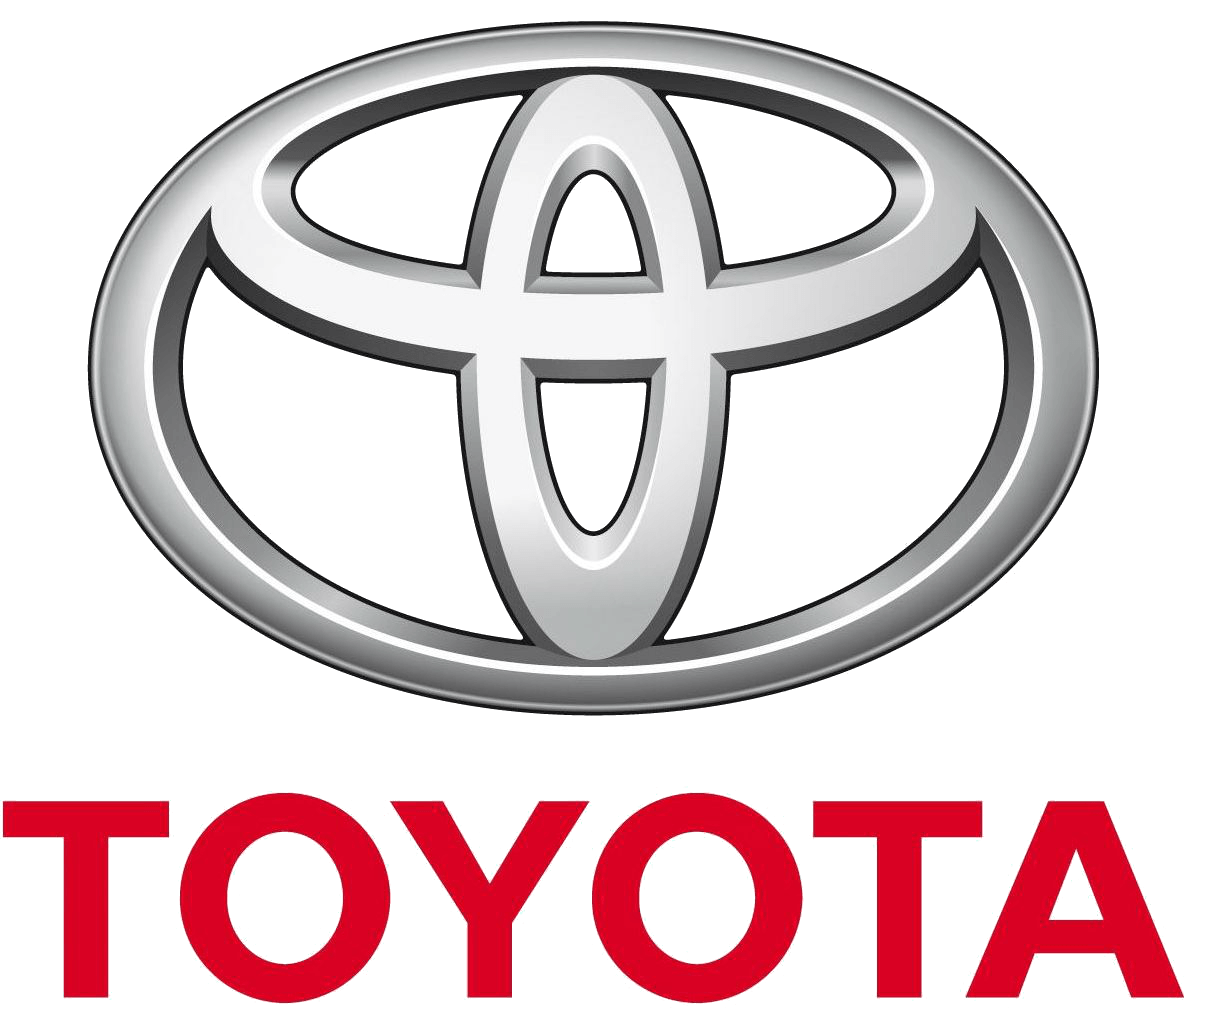 Silver Oval Car Logo - Toyota Logo, Toyota Car Symbol Meaning and History | Car Brand Names.com